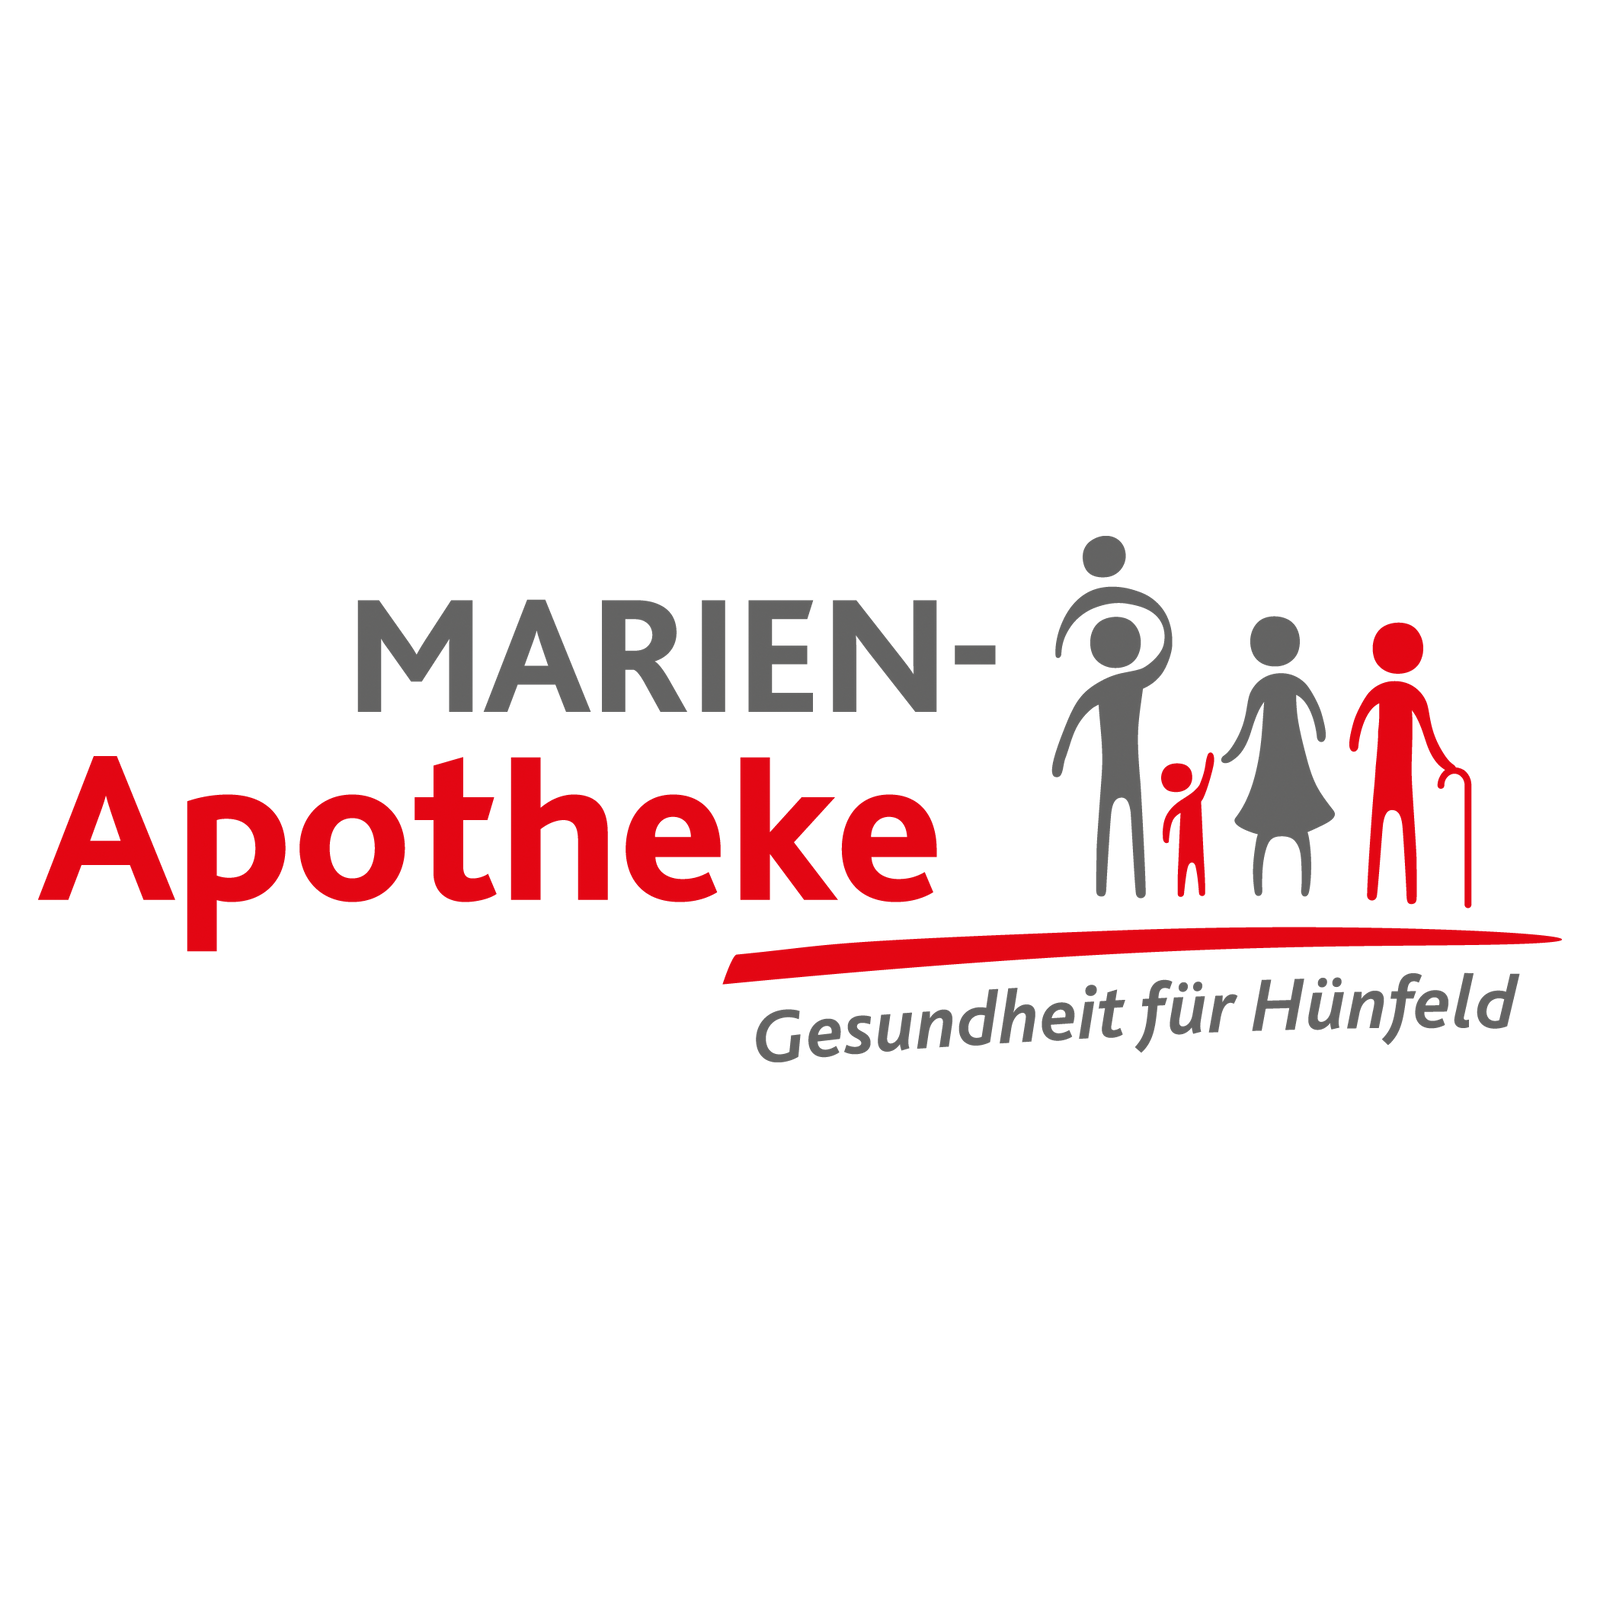 Marien-Apotheke in Hünfeld - Logo